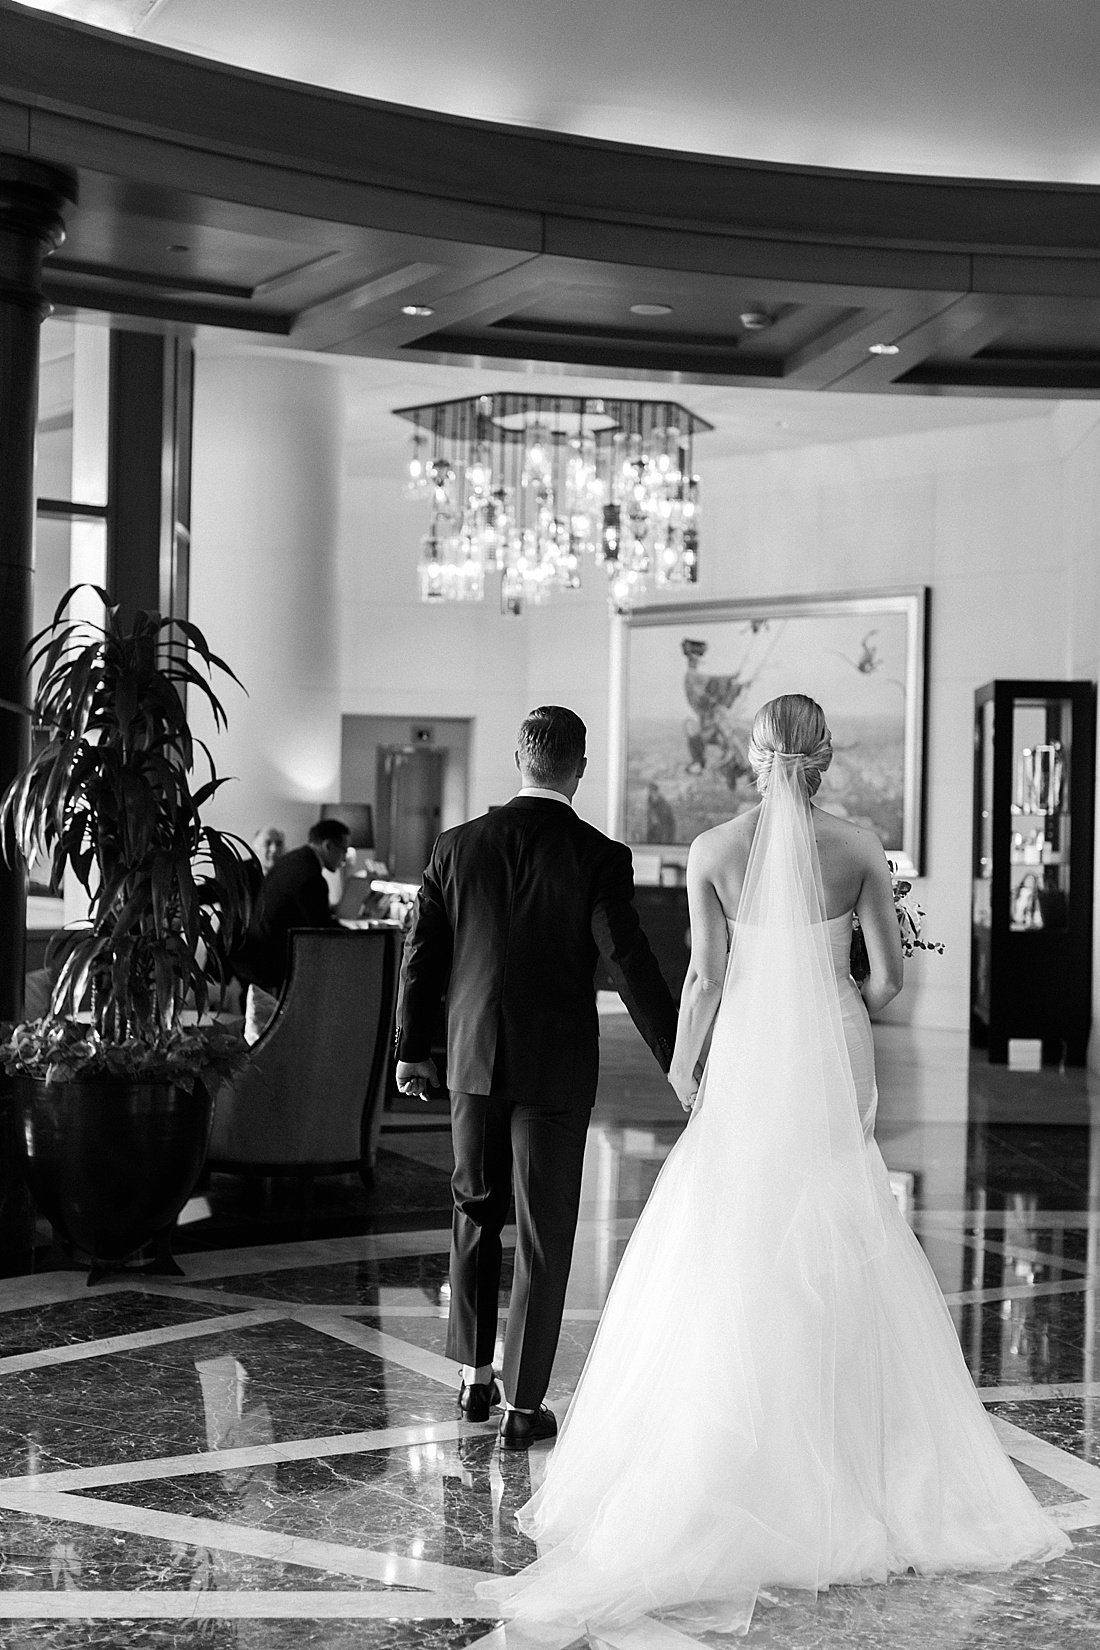 Mandarin Oriental Hotel DC wedding portraits | Abby Grace Photography